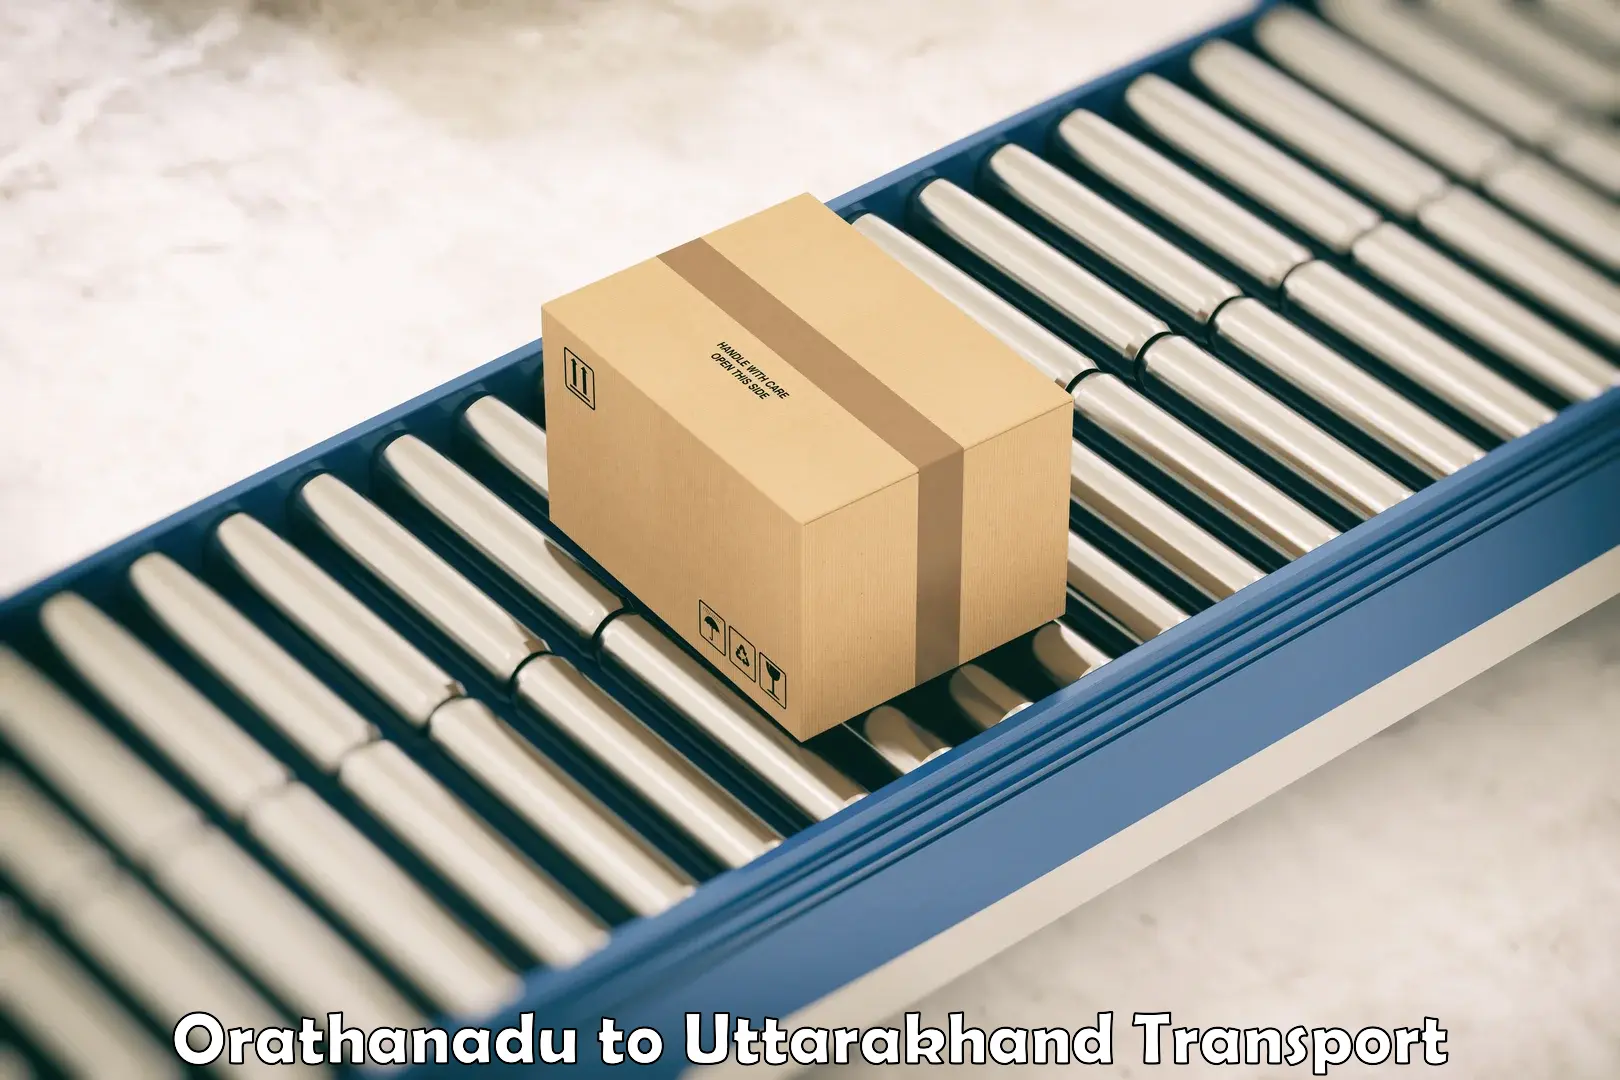 Goods delivery service Orathanadu to Rishikesh